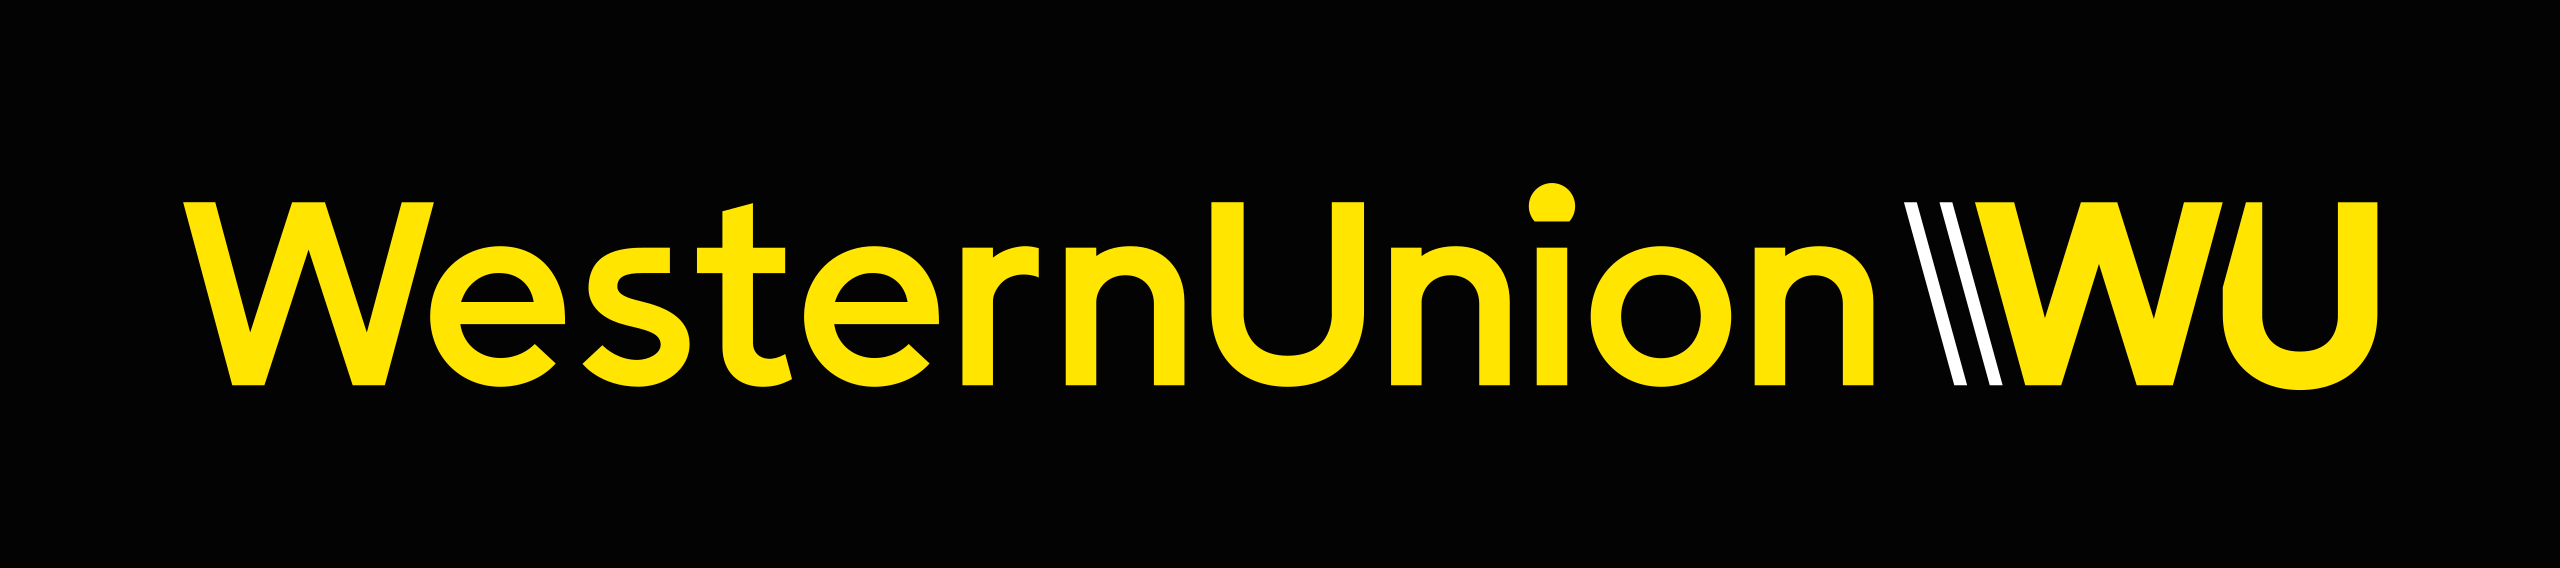 Western_Union_Logo_2019.svg.png